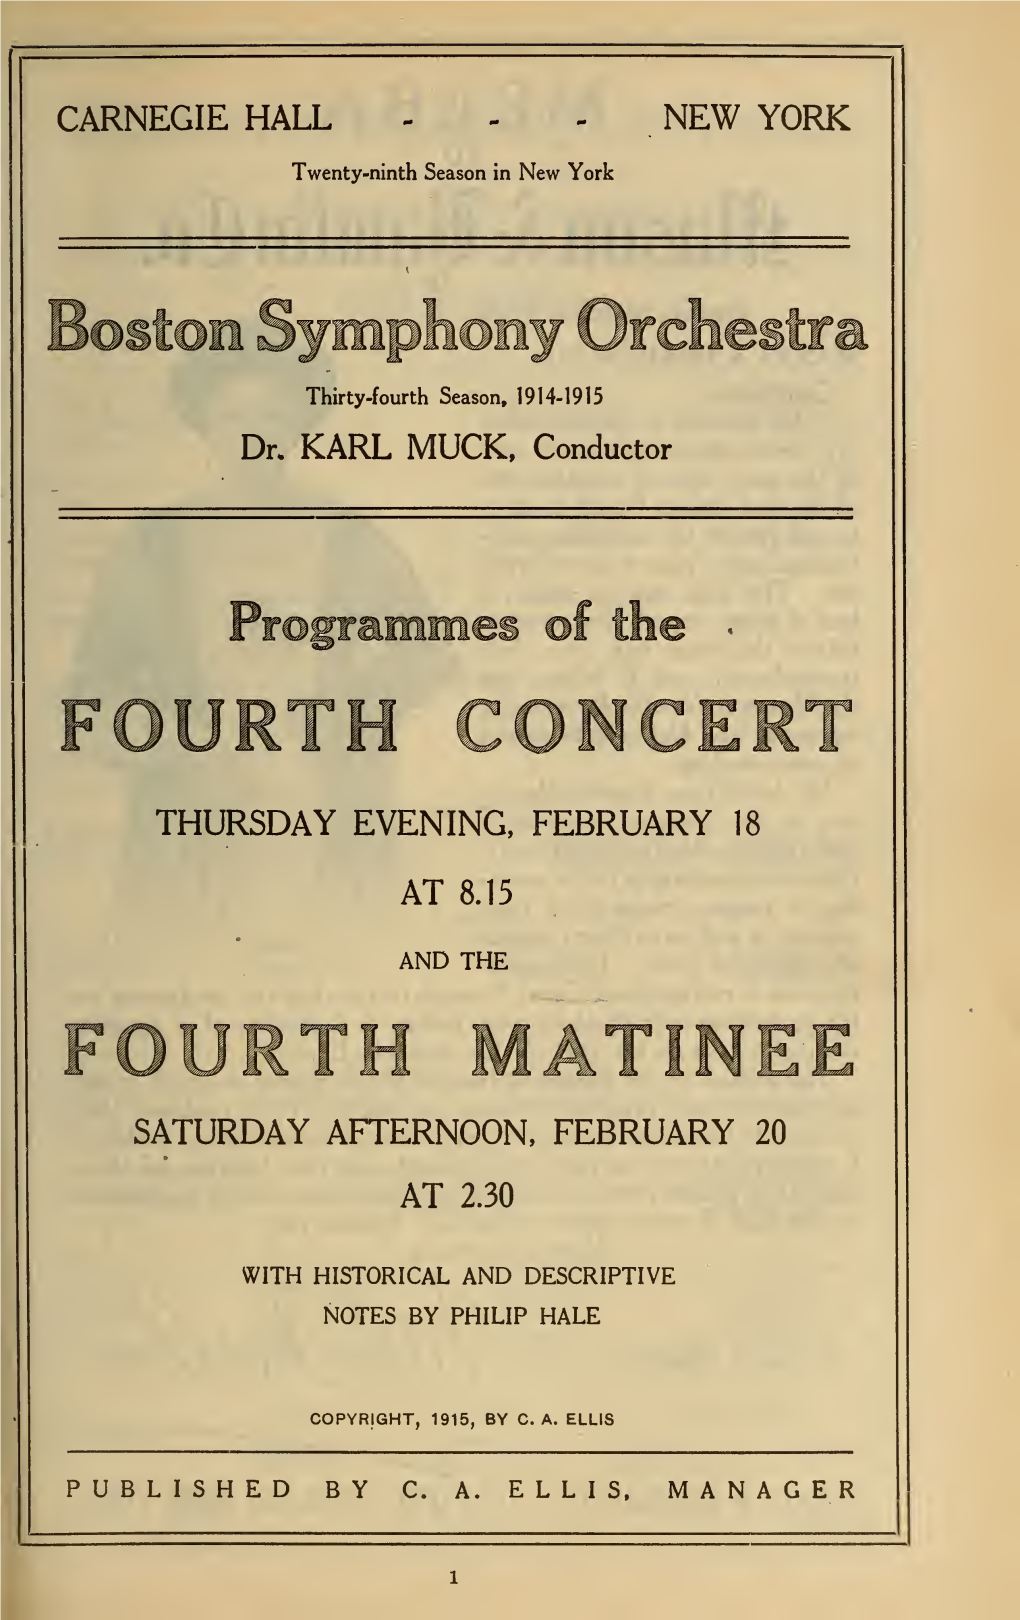 Boston Symphony Orchestra Concert Programs, Season 34,1914-1915, Trip